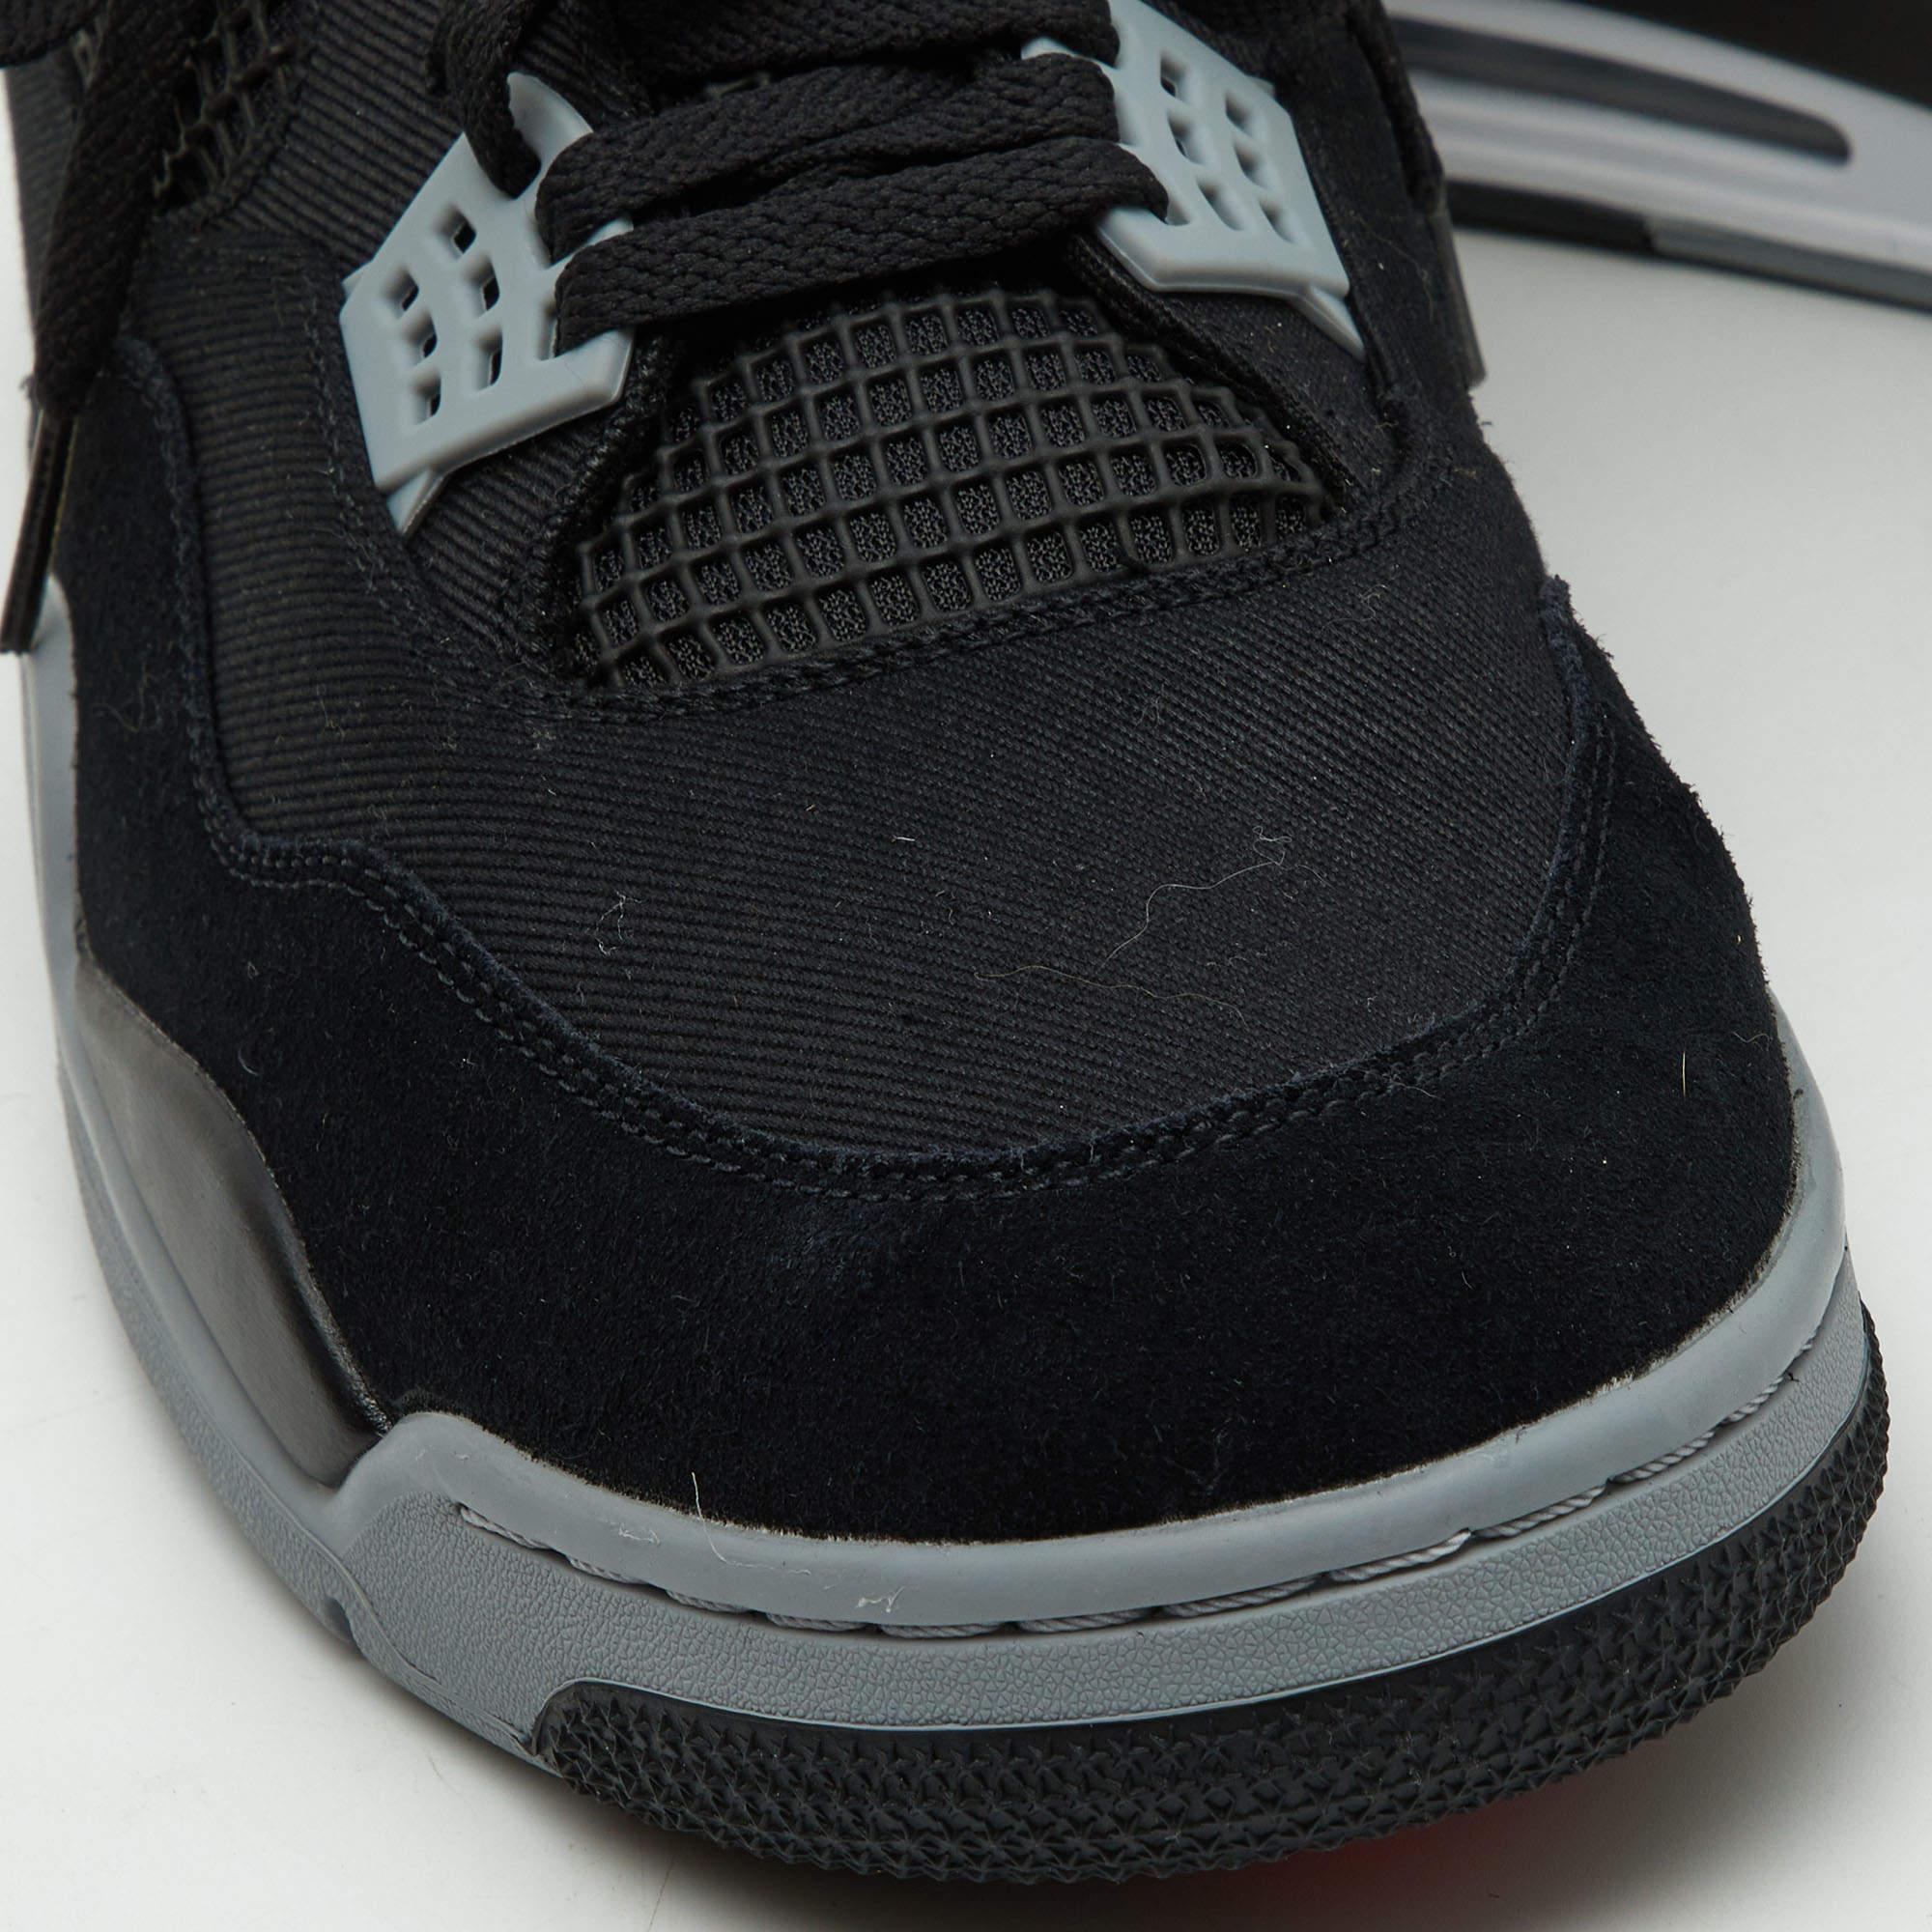 Air Jordans Black Canvas and Suede Jordan 4 Retro Sneakers Size 50.5 5